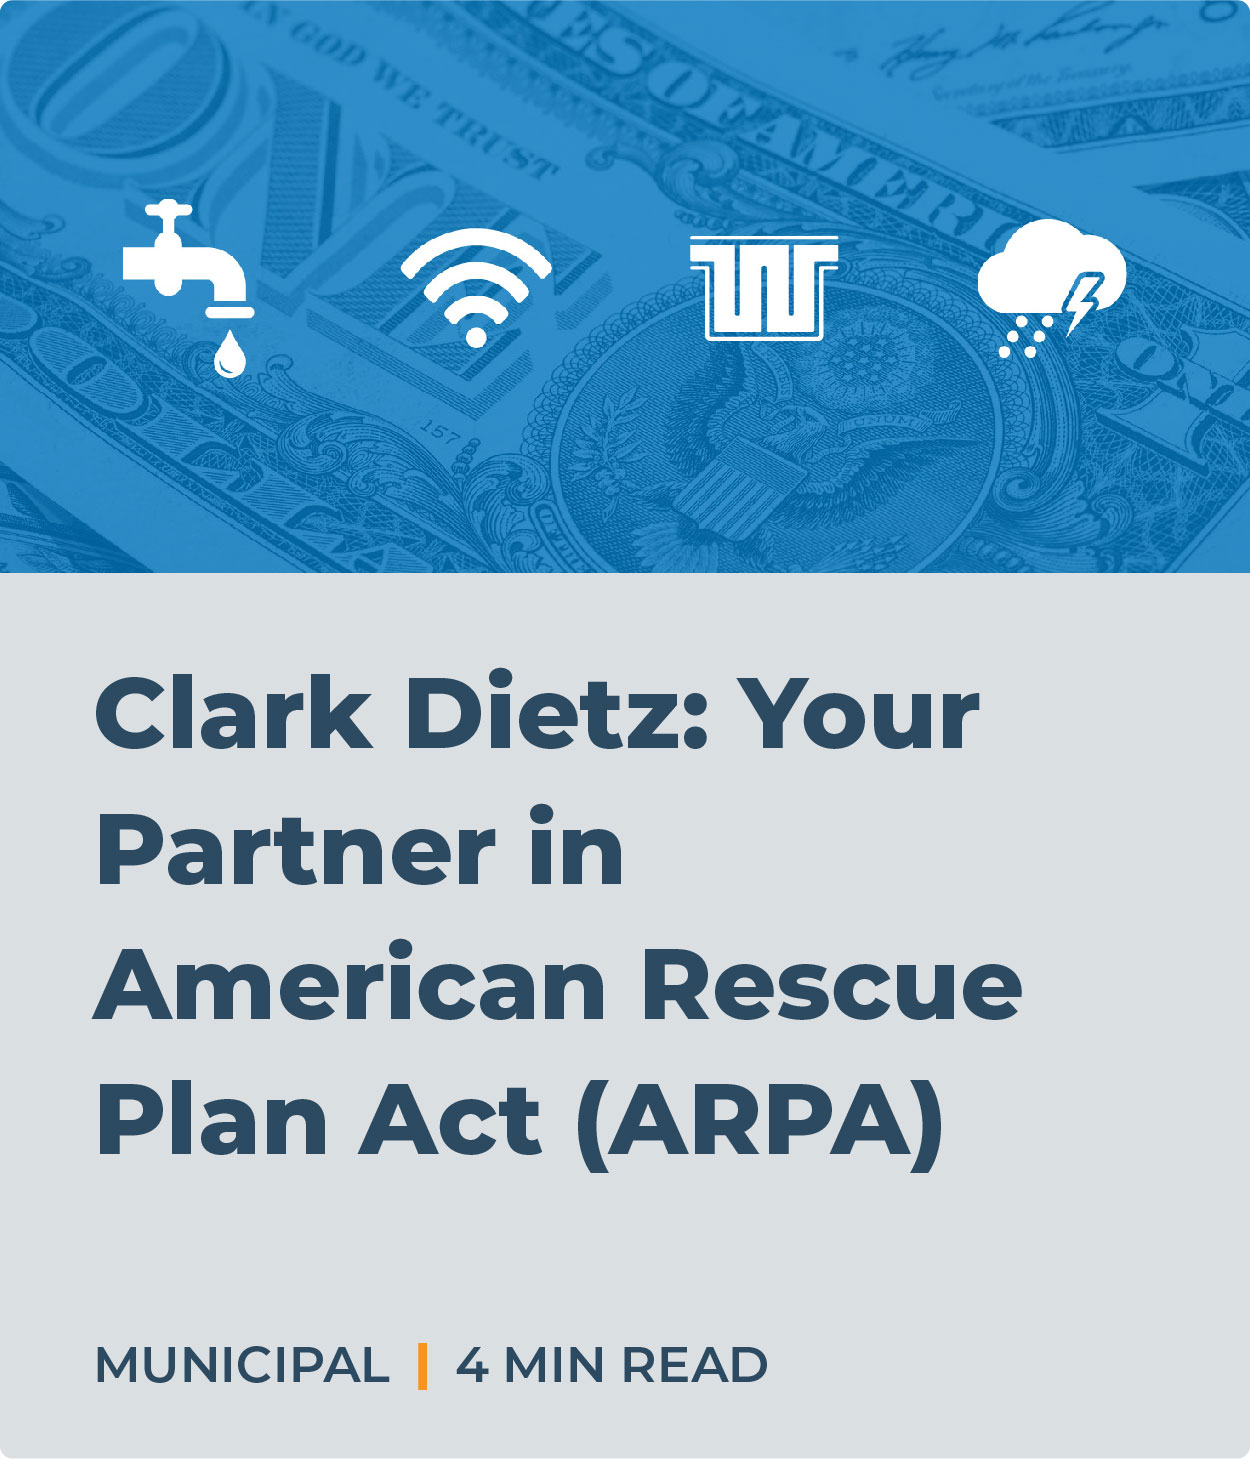 Clark Dietz: Your Partner in American Rescue Plan Act (ARPA)